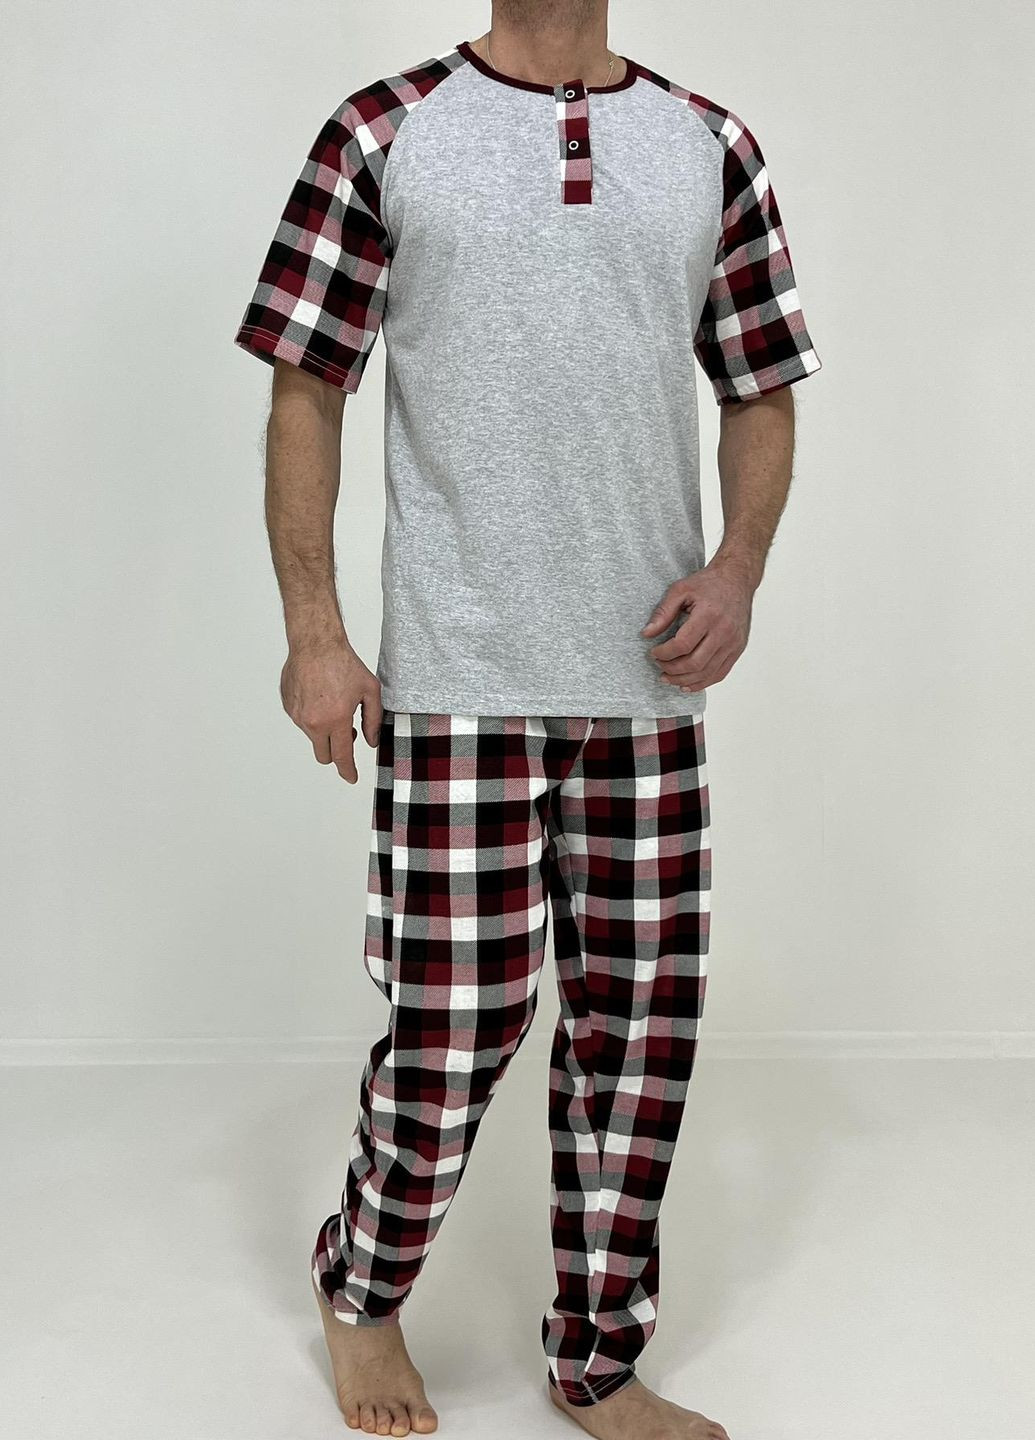 Пижама мужская Nico футболка + штаны в клетку 58-60 Серая 83676857-3 Triko (276708877)